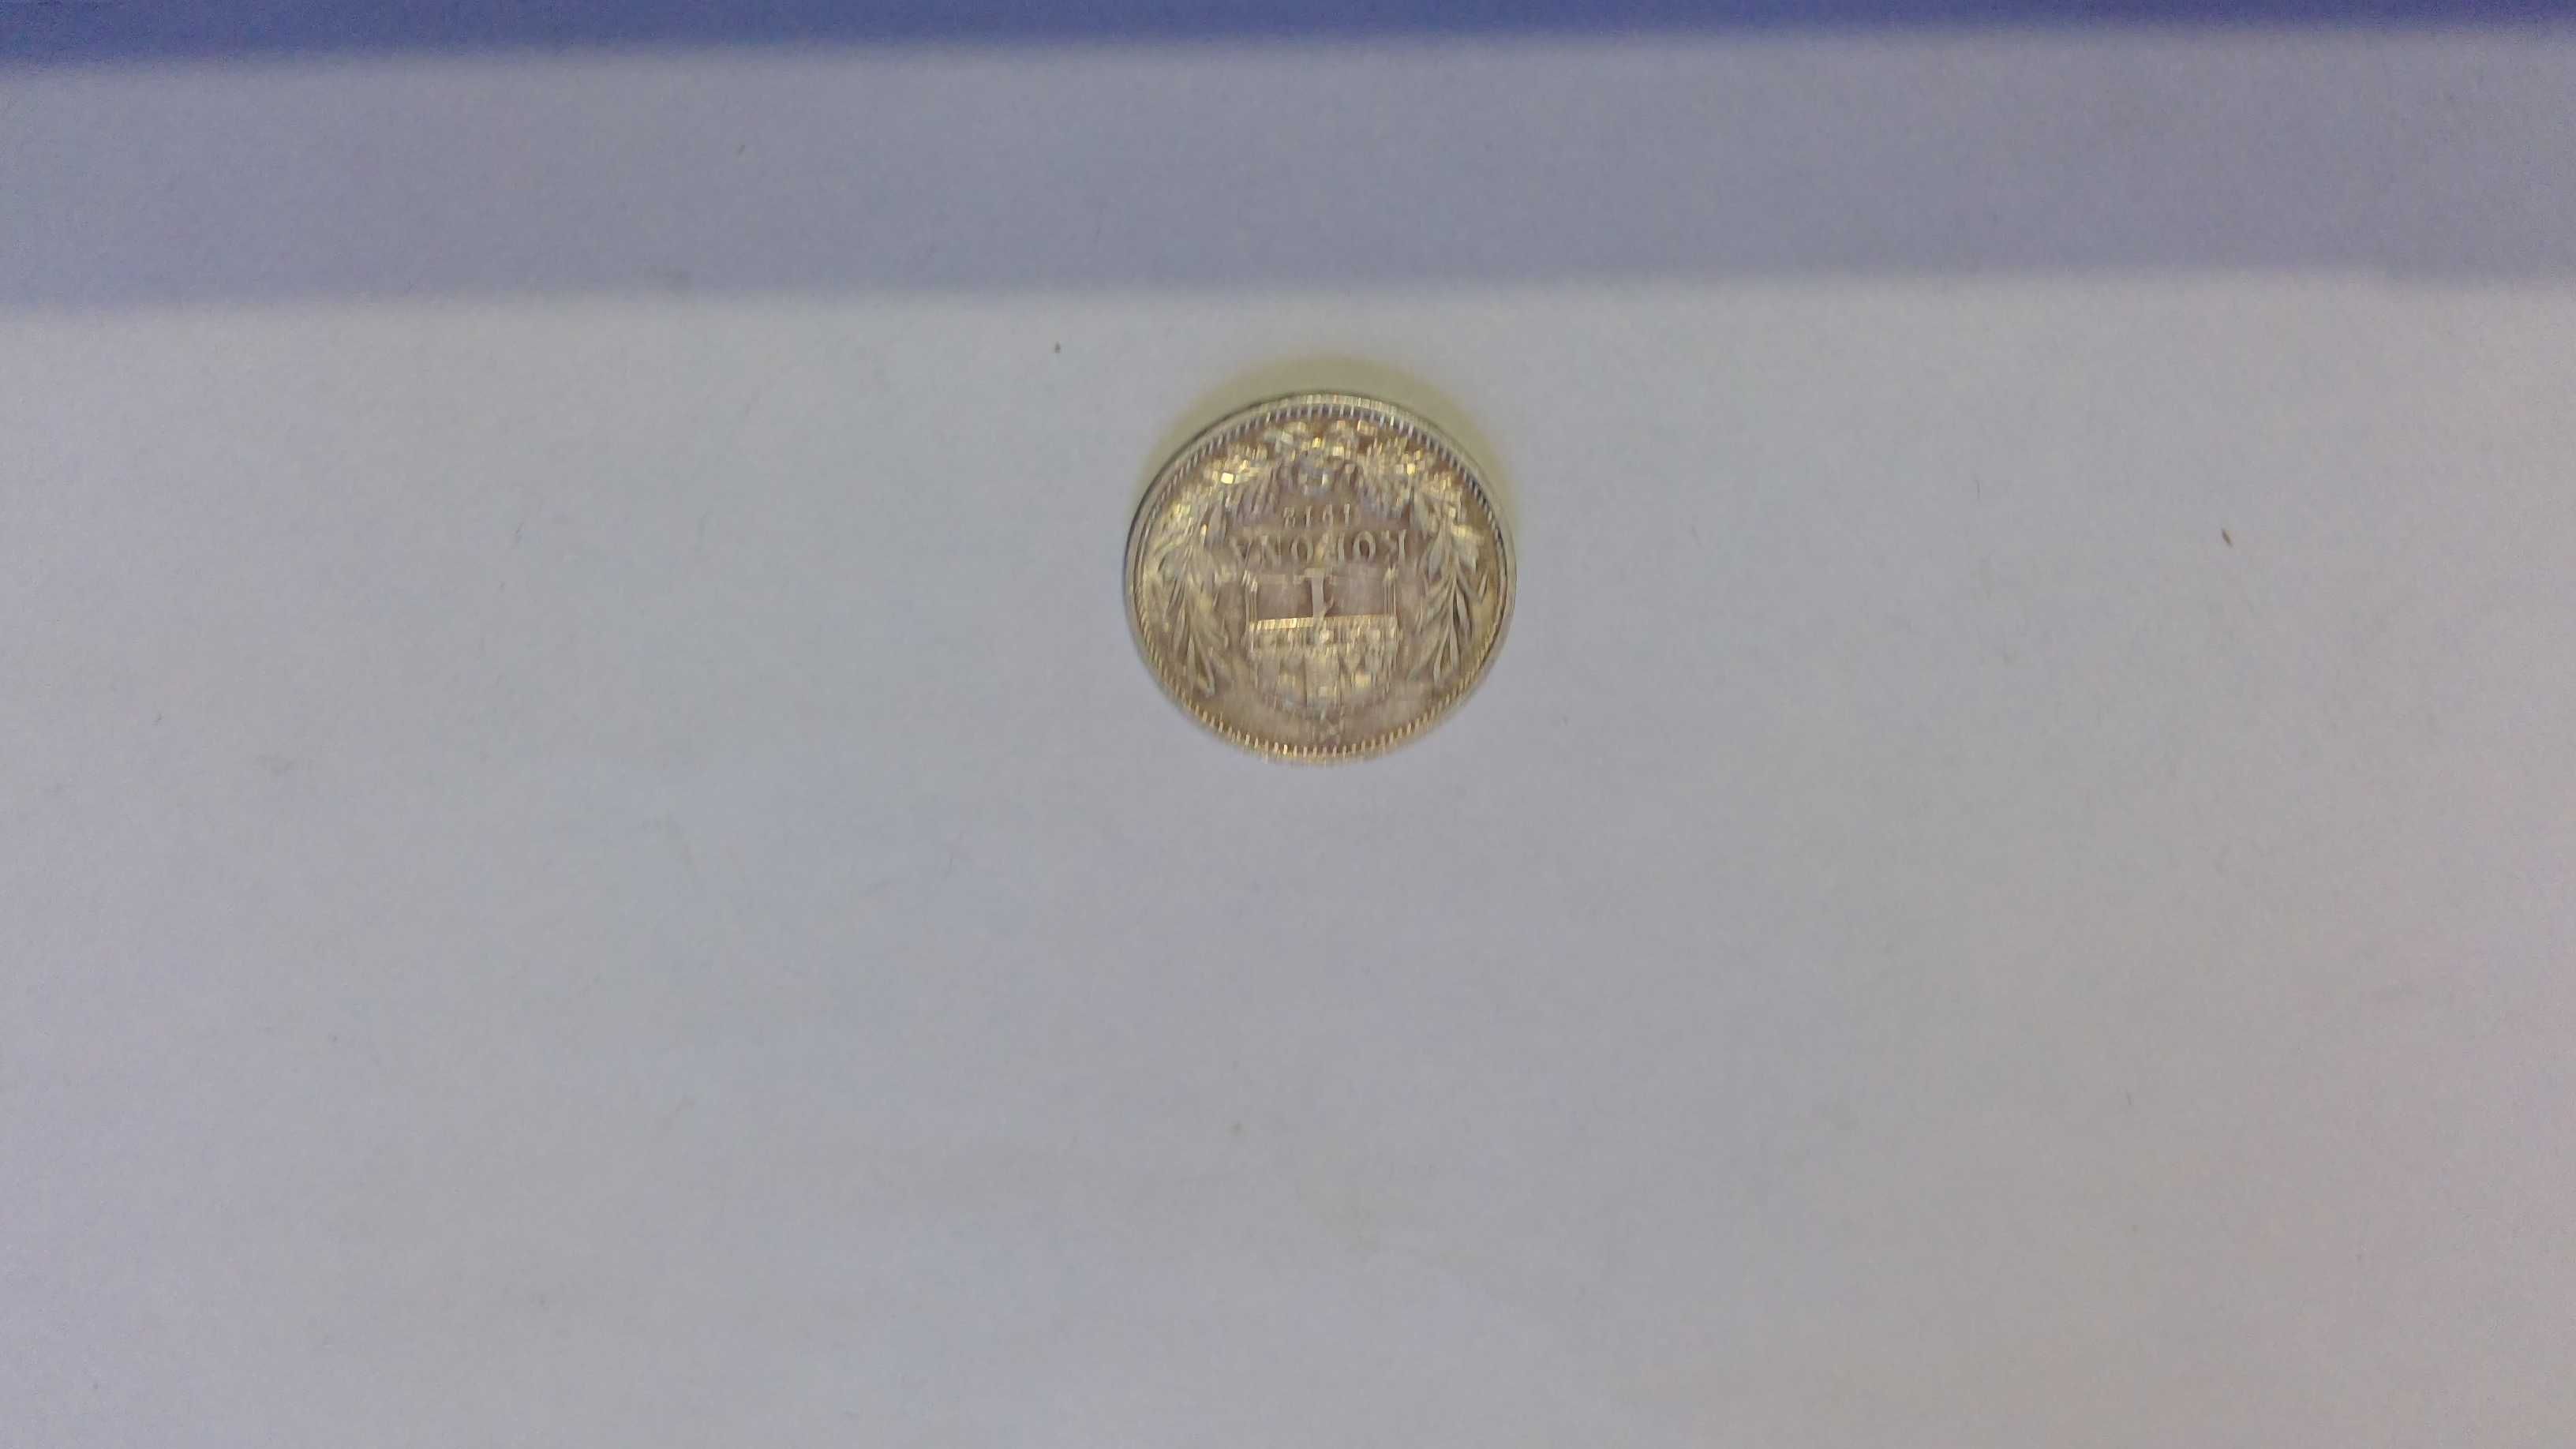 Monede vechi de o suta de ani